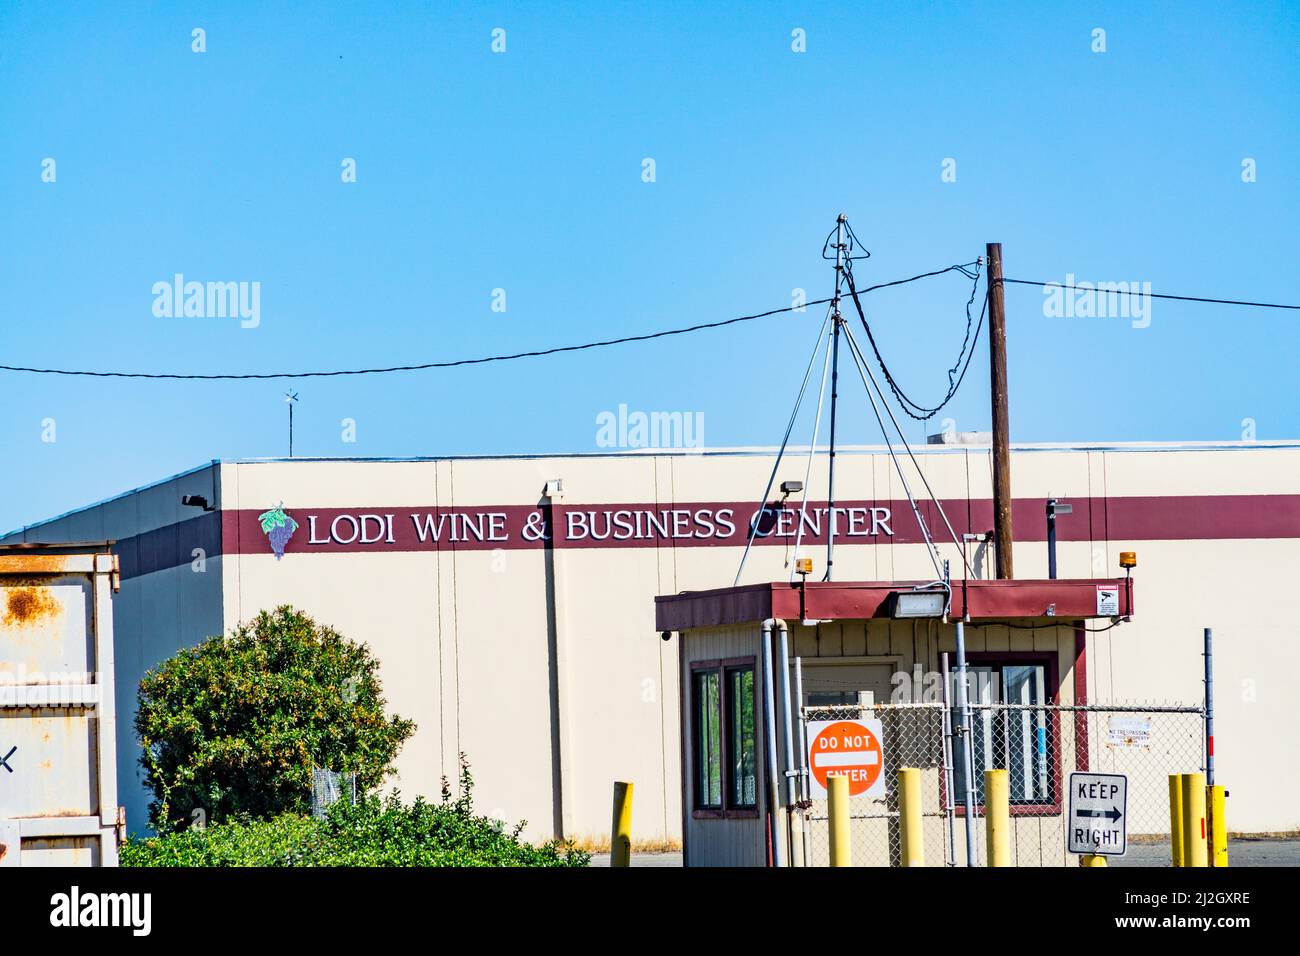 The Lodi Wine And Business center in California Stock Photo